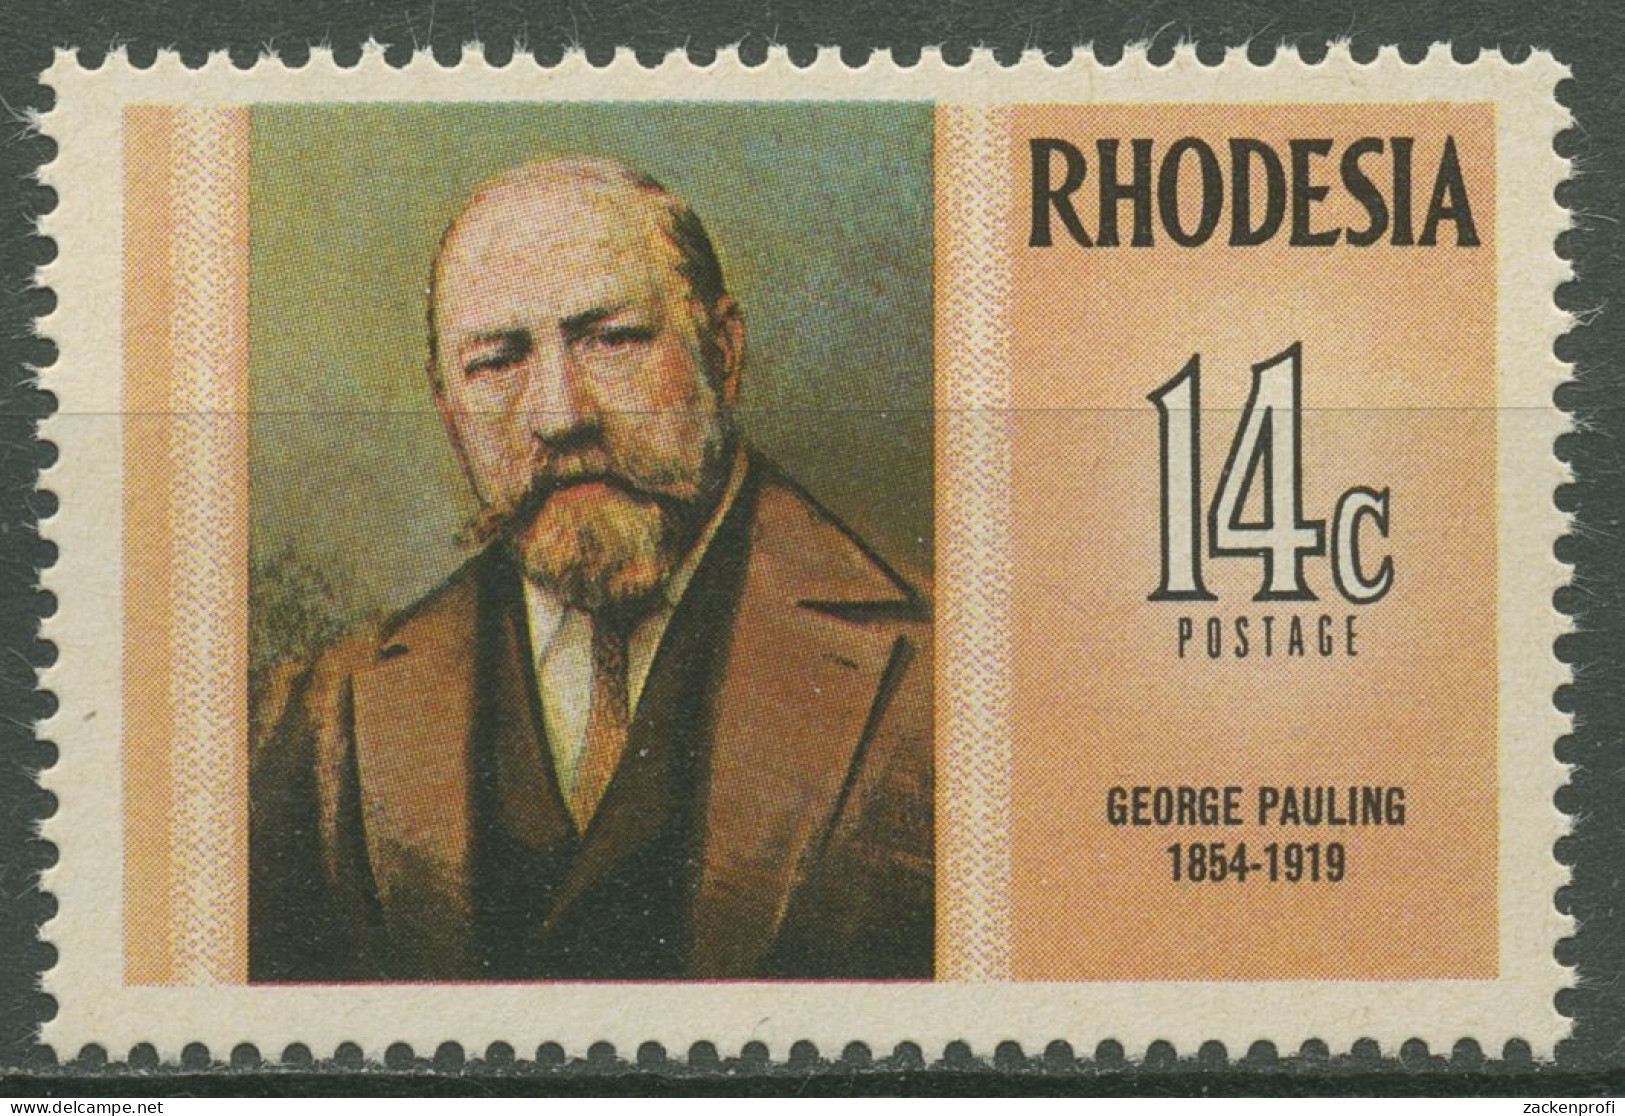 Rhodesien 1974 Ingenieur George Pauling 139 Postfrisch - Rodesia (1964-1980)